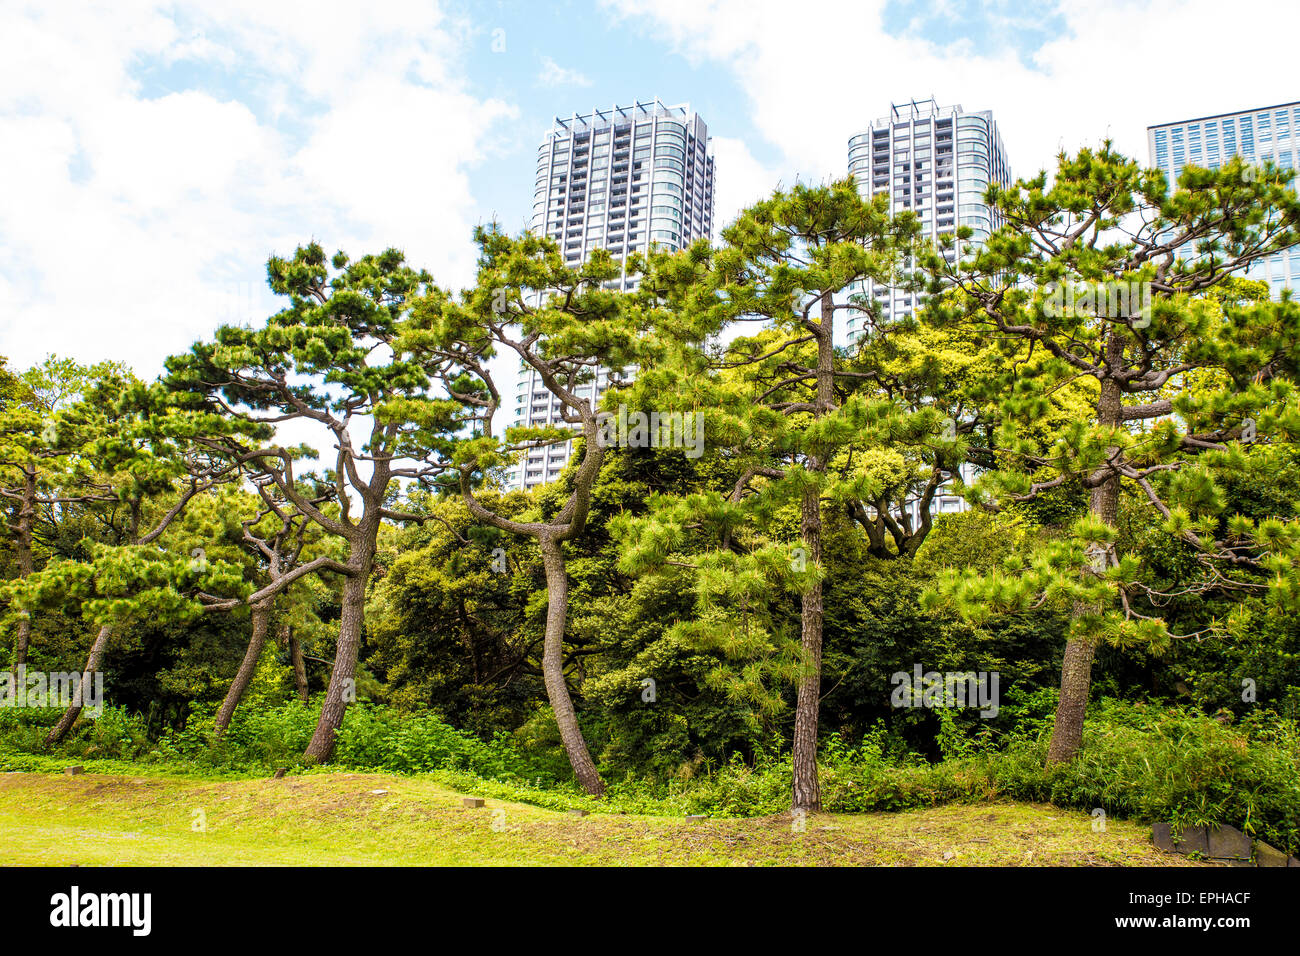 Hama Rikyu gardens with skyscrapers in the background Stock Photo